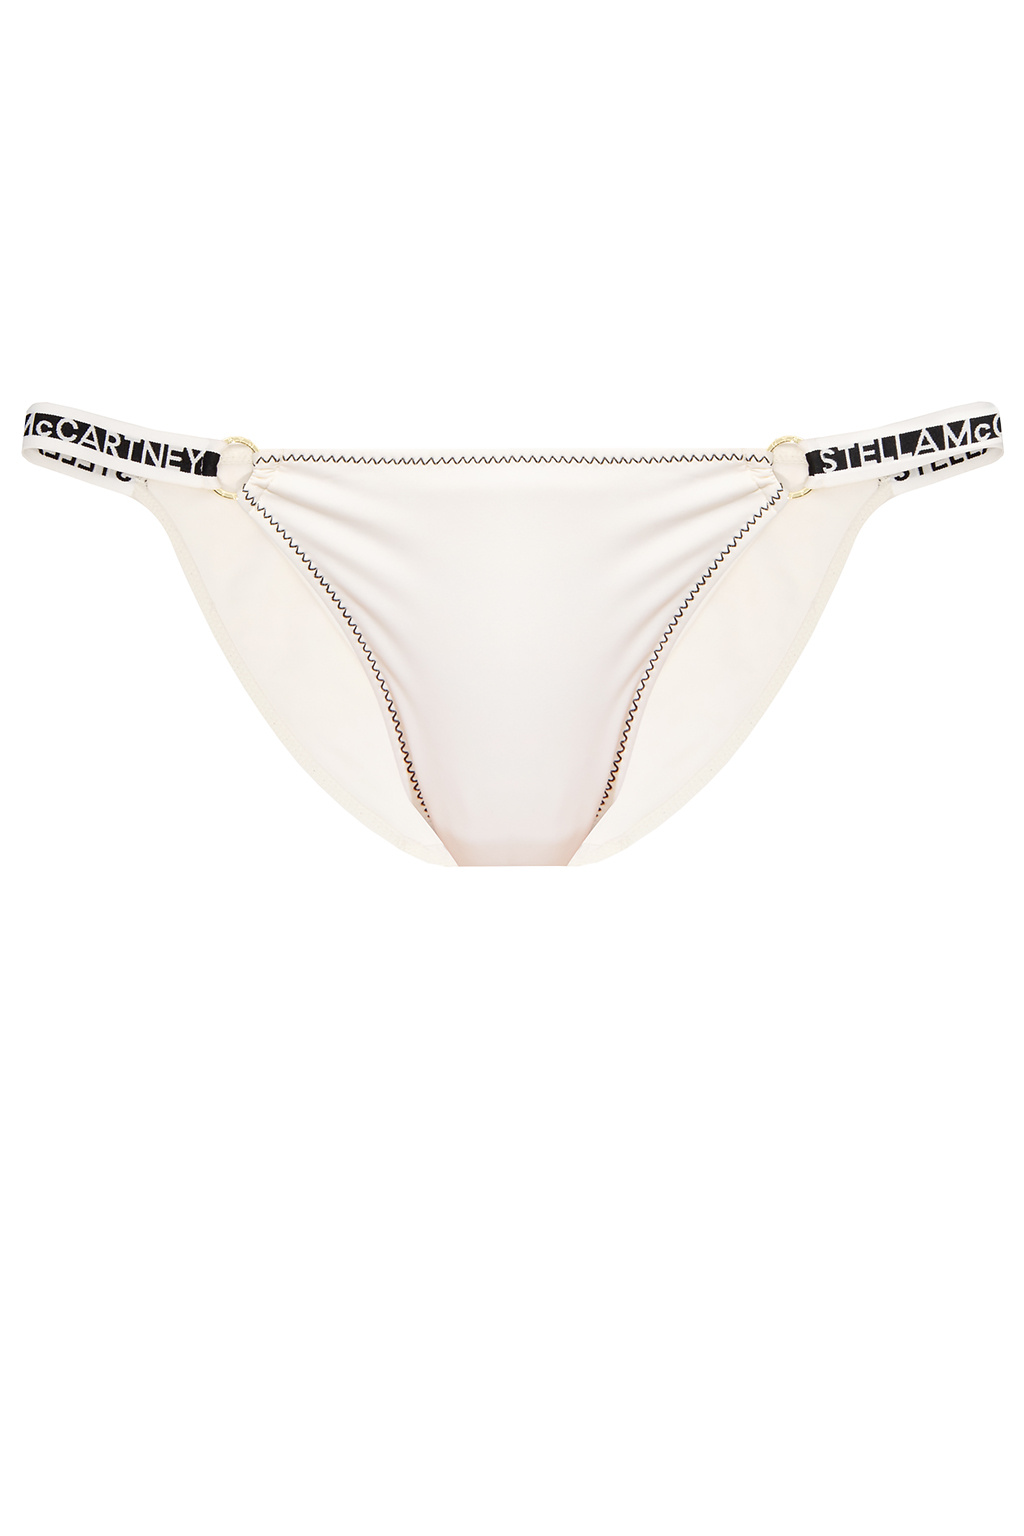 Stella McCartney ‘Logo Tape’ swimsuit bottom